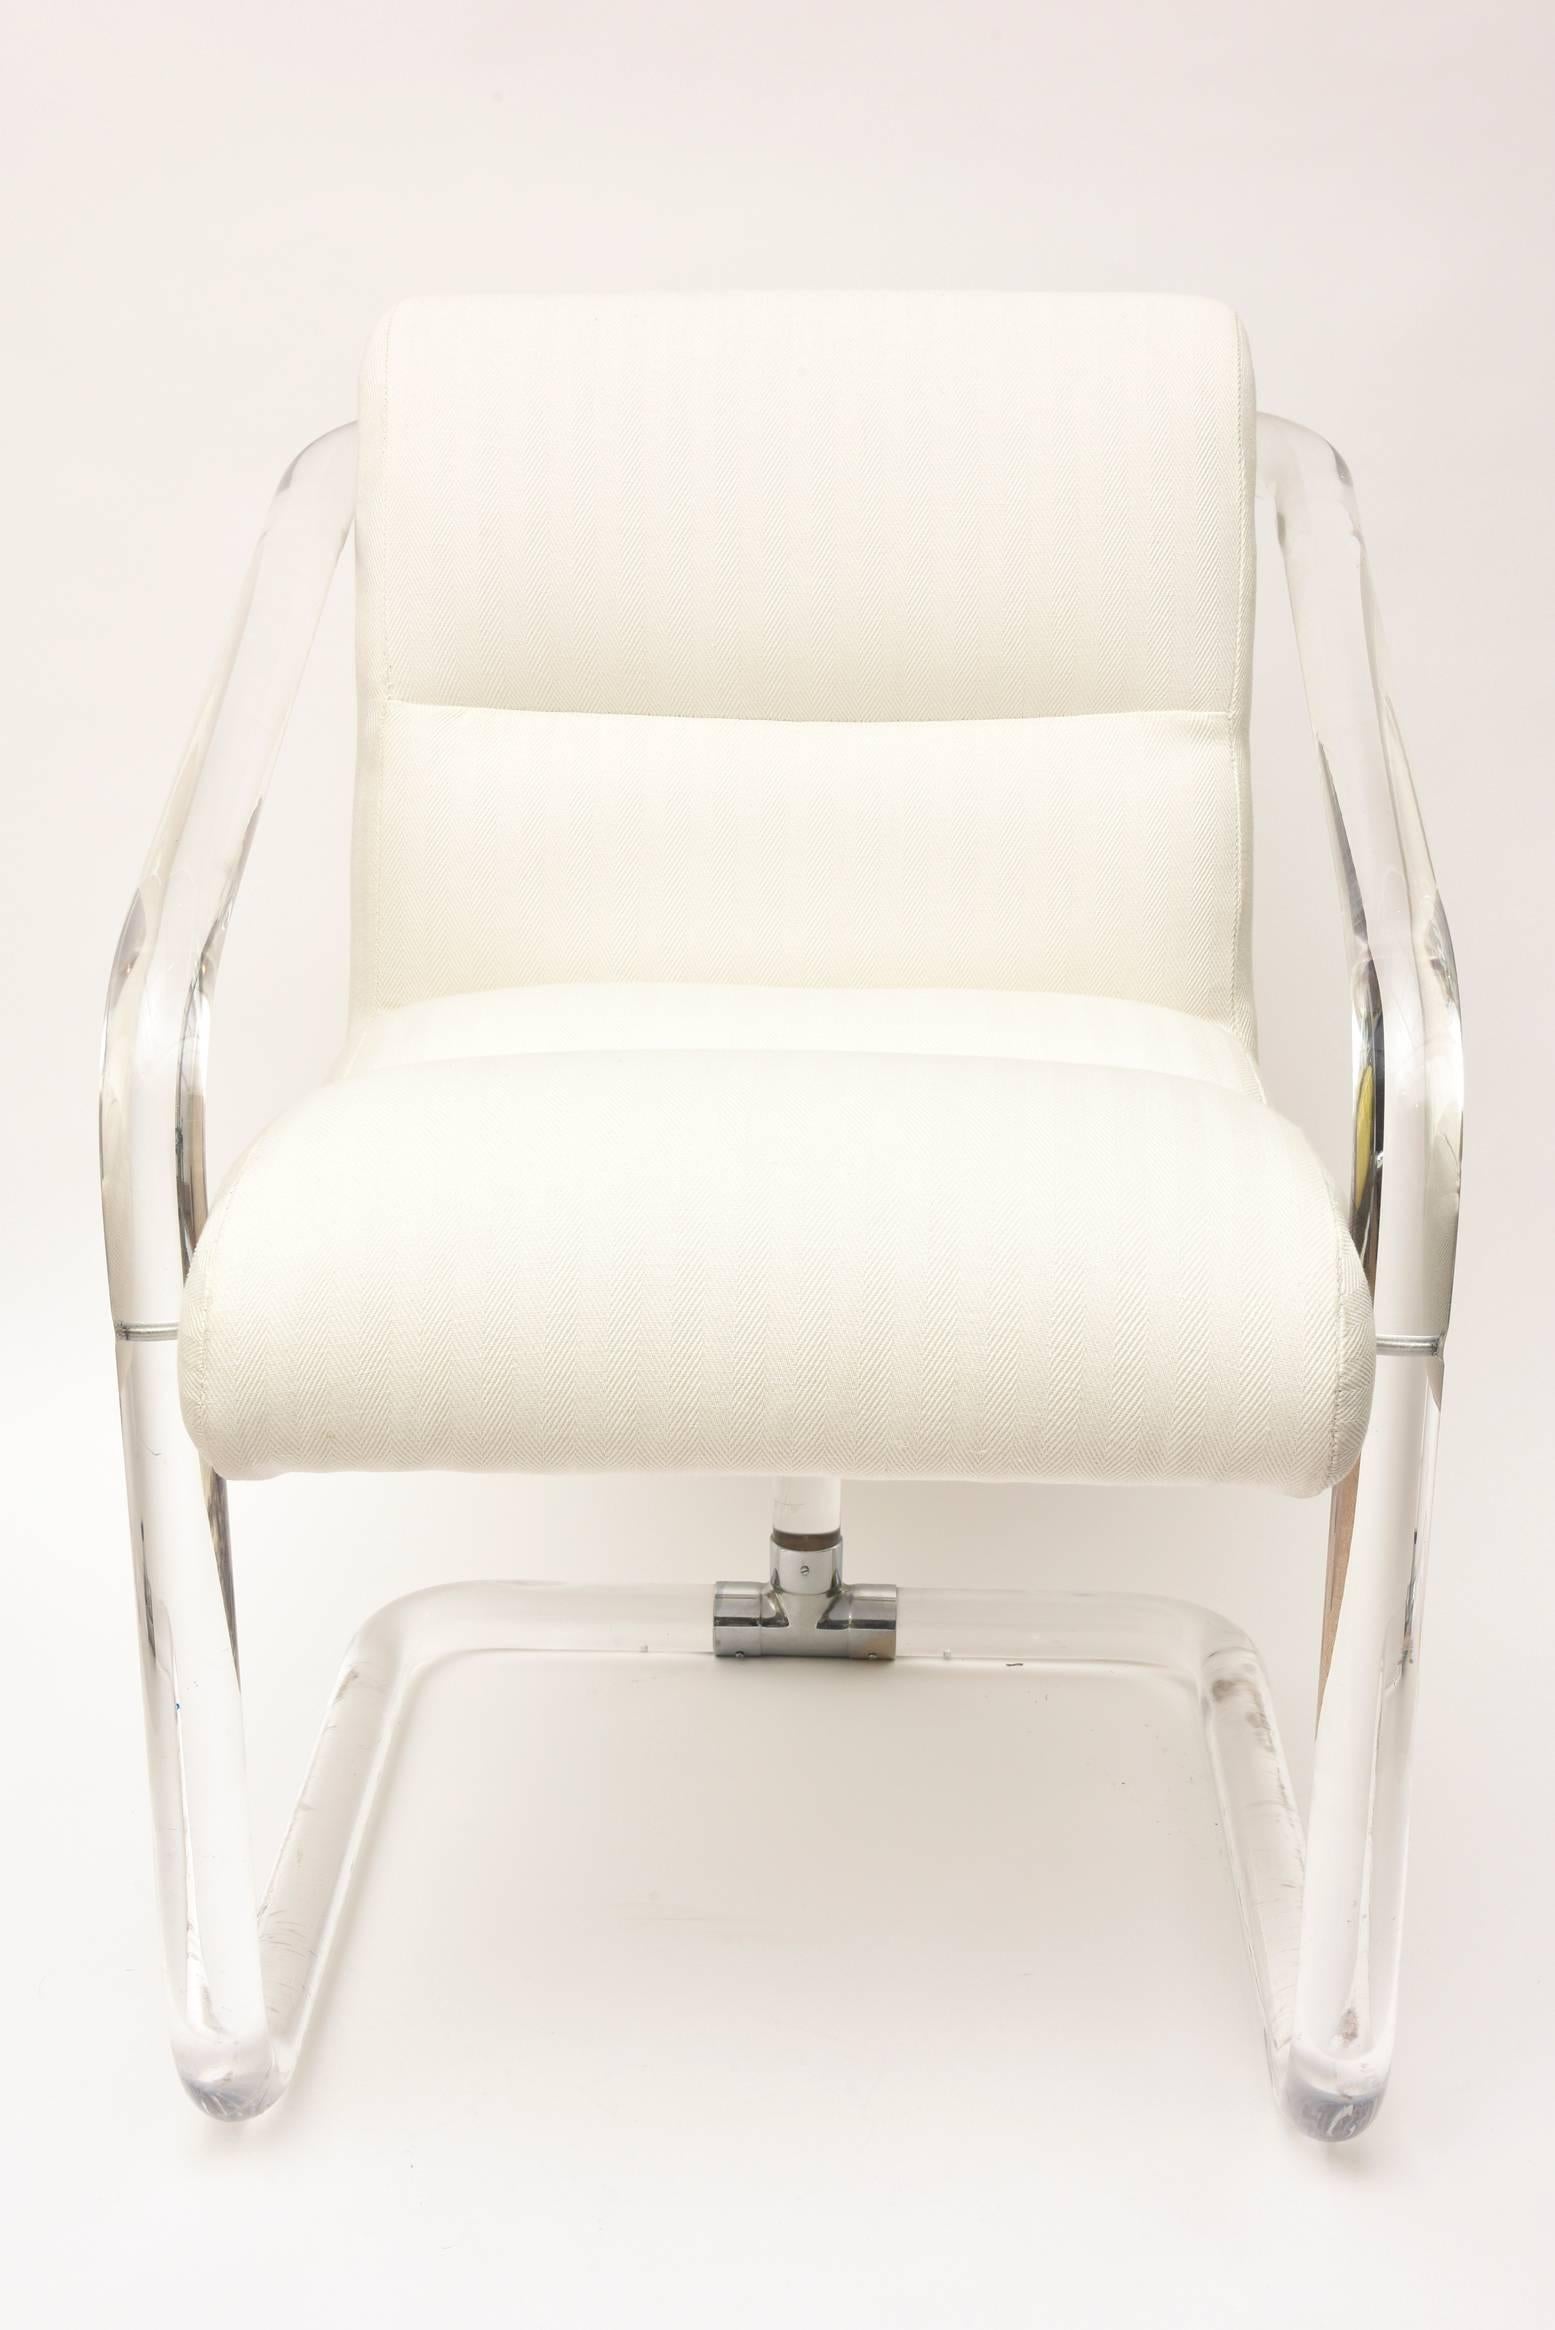 American Signed Lion in Frost Tubular Lucite & Chrome Upholstered Desk/ Vanity Chair